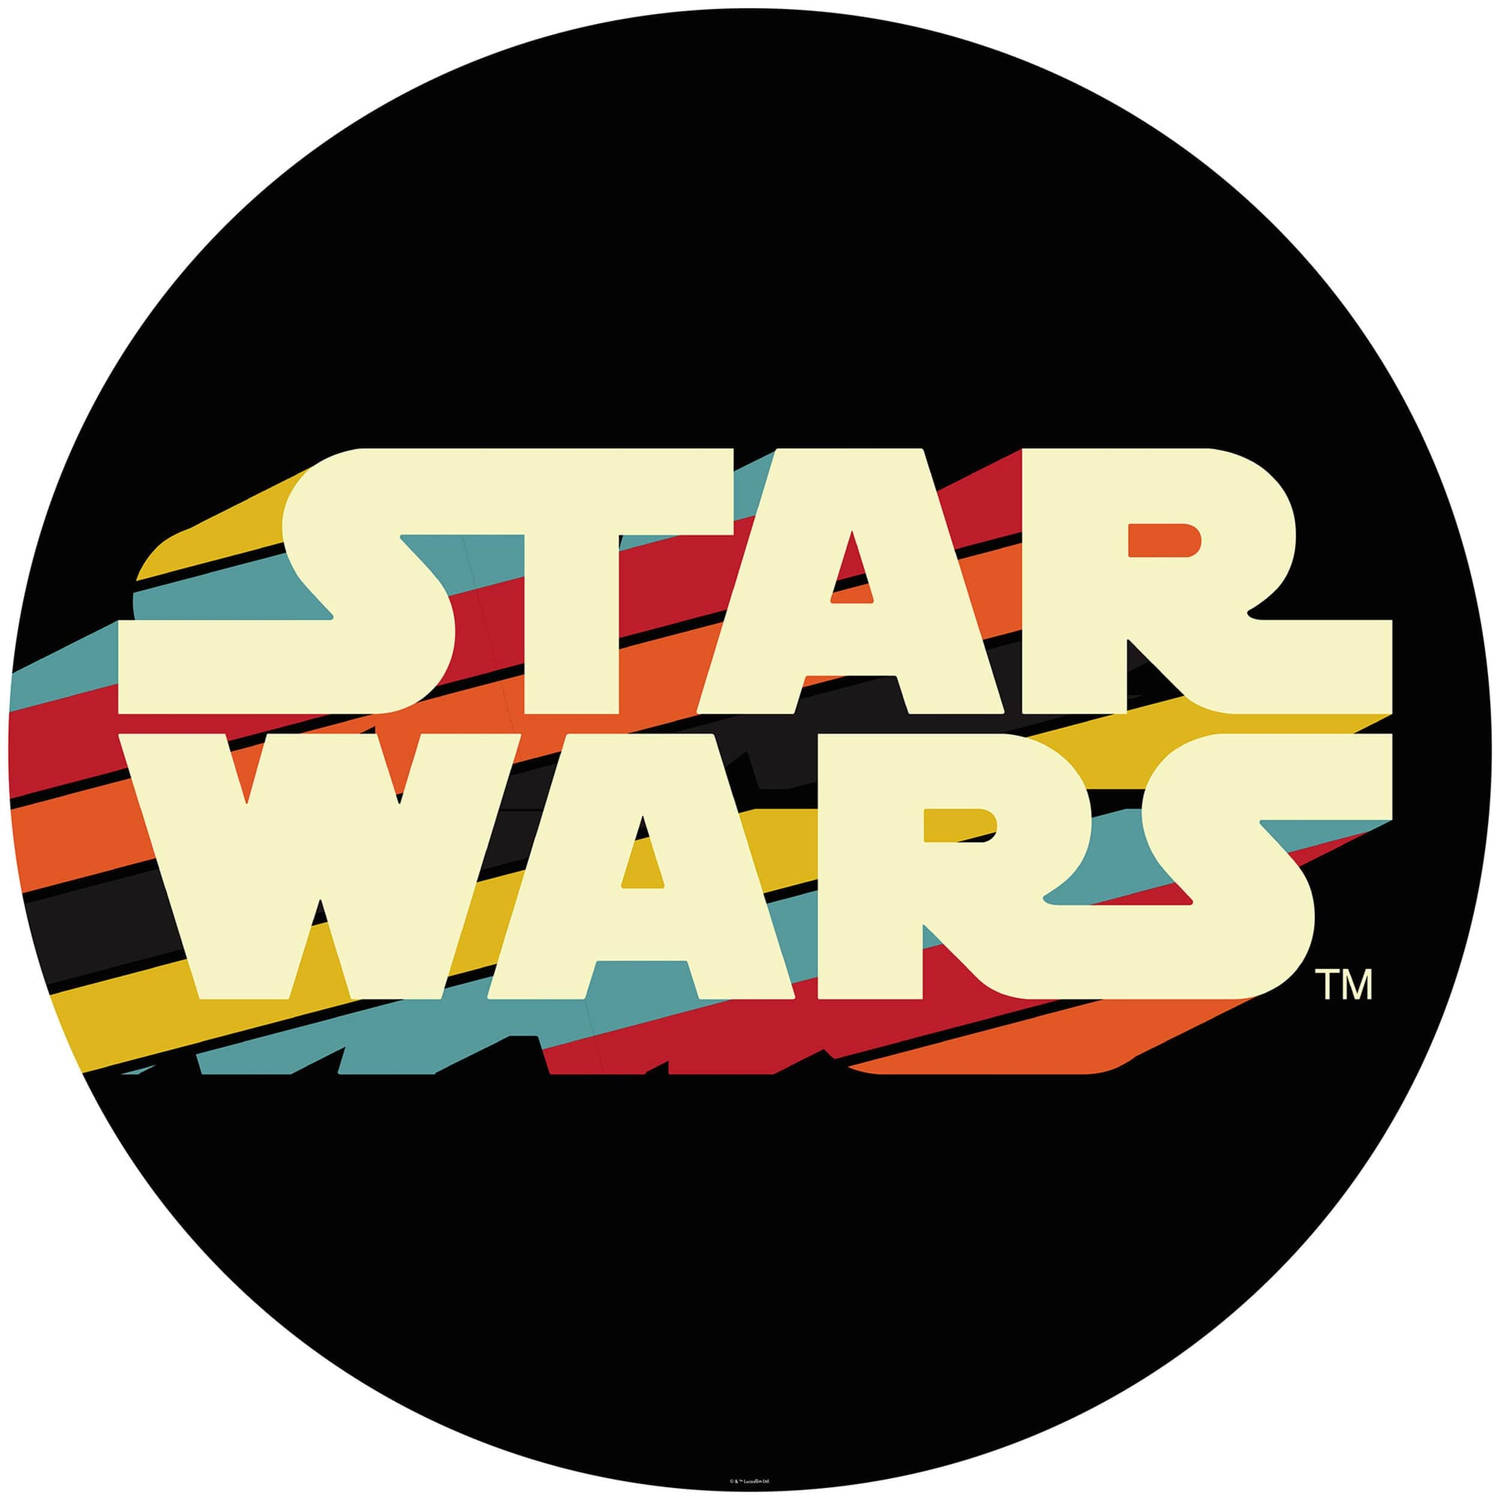 Komar muursticker Dots Star Wars Typeface